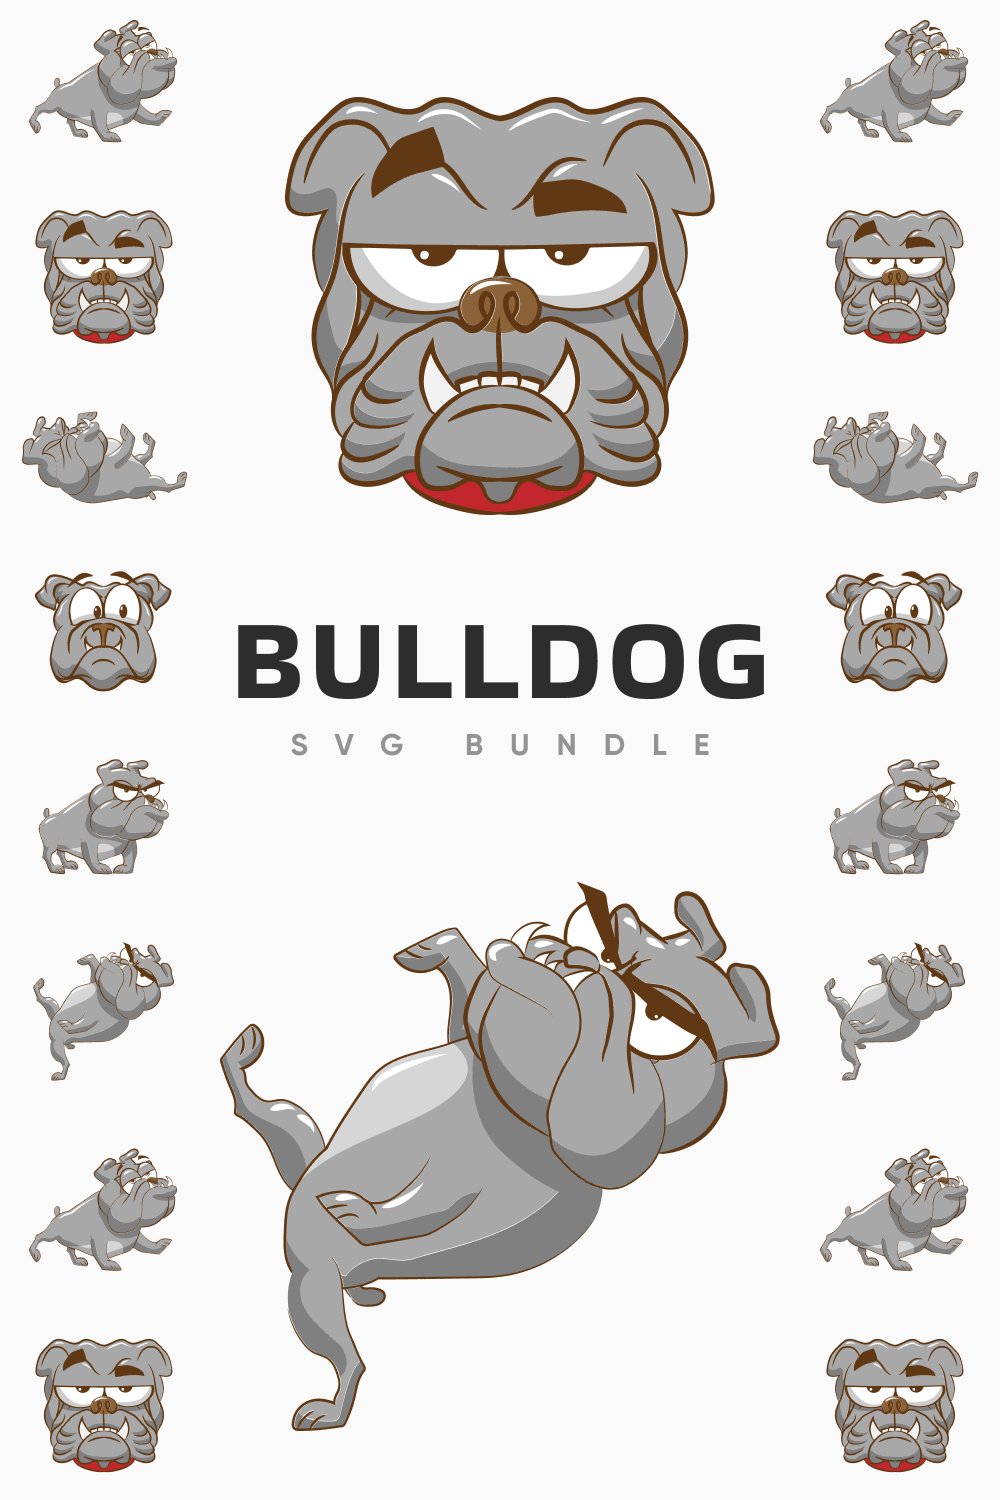 Bulldog SVG mood collection.